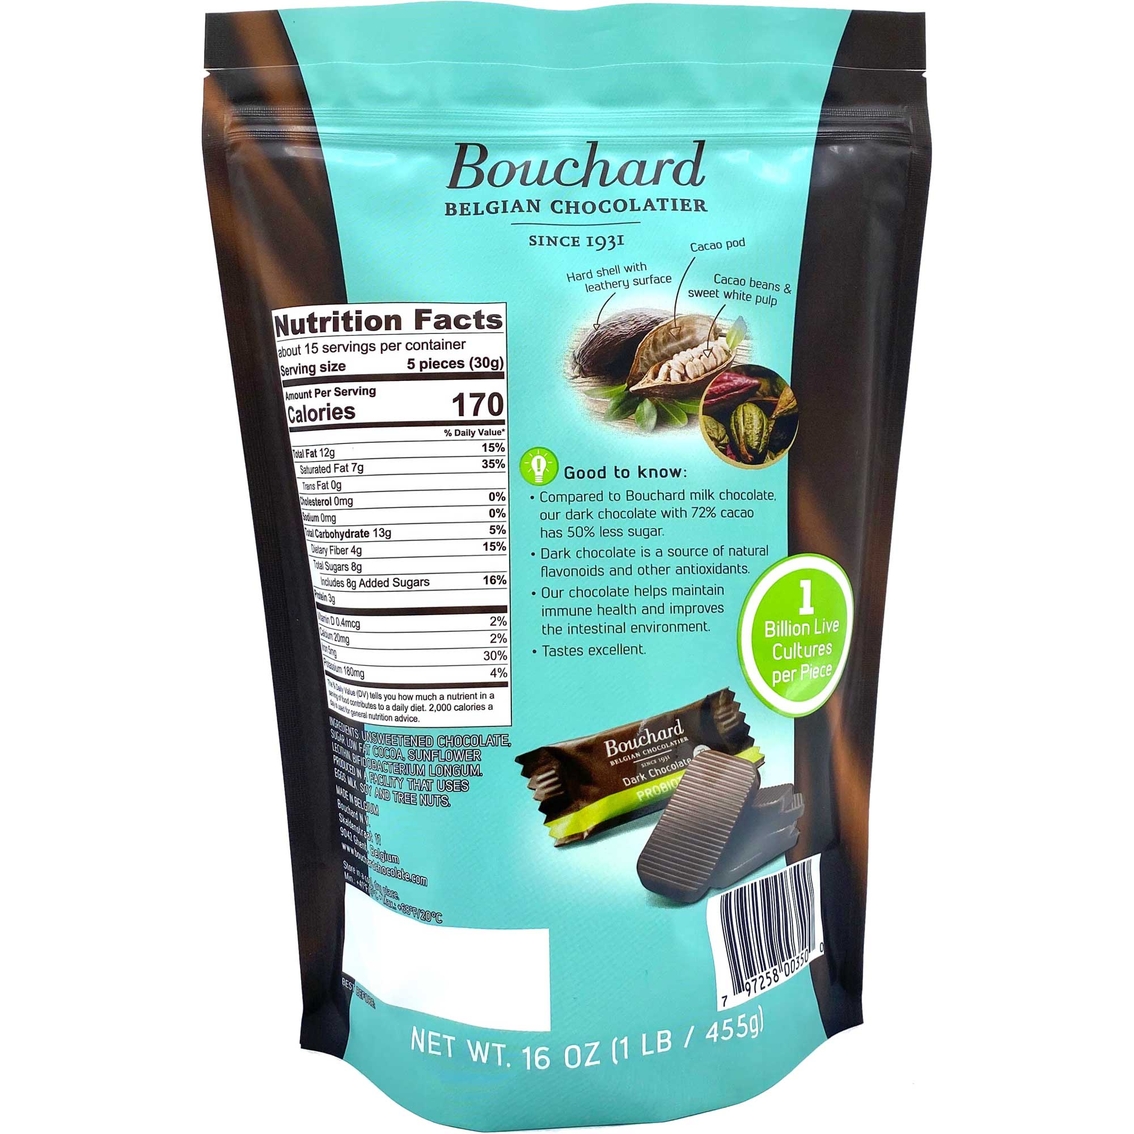 Bouchard Belgian Dark Probiotic Chocolate, 2 bags of 1 lb. each - Image 2 of 2